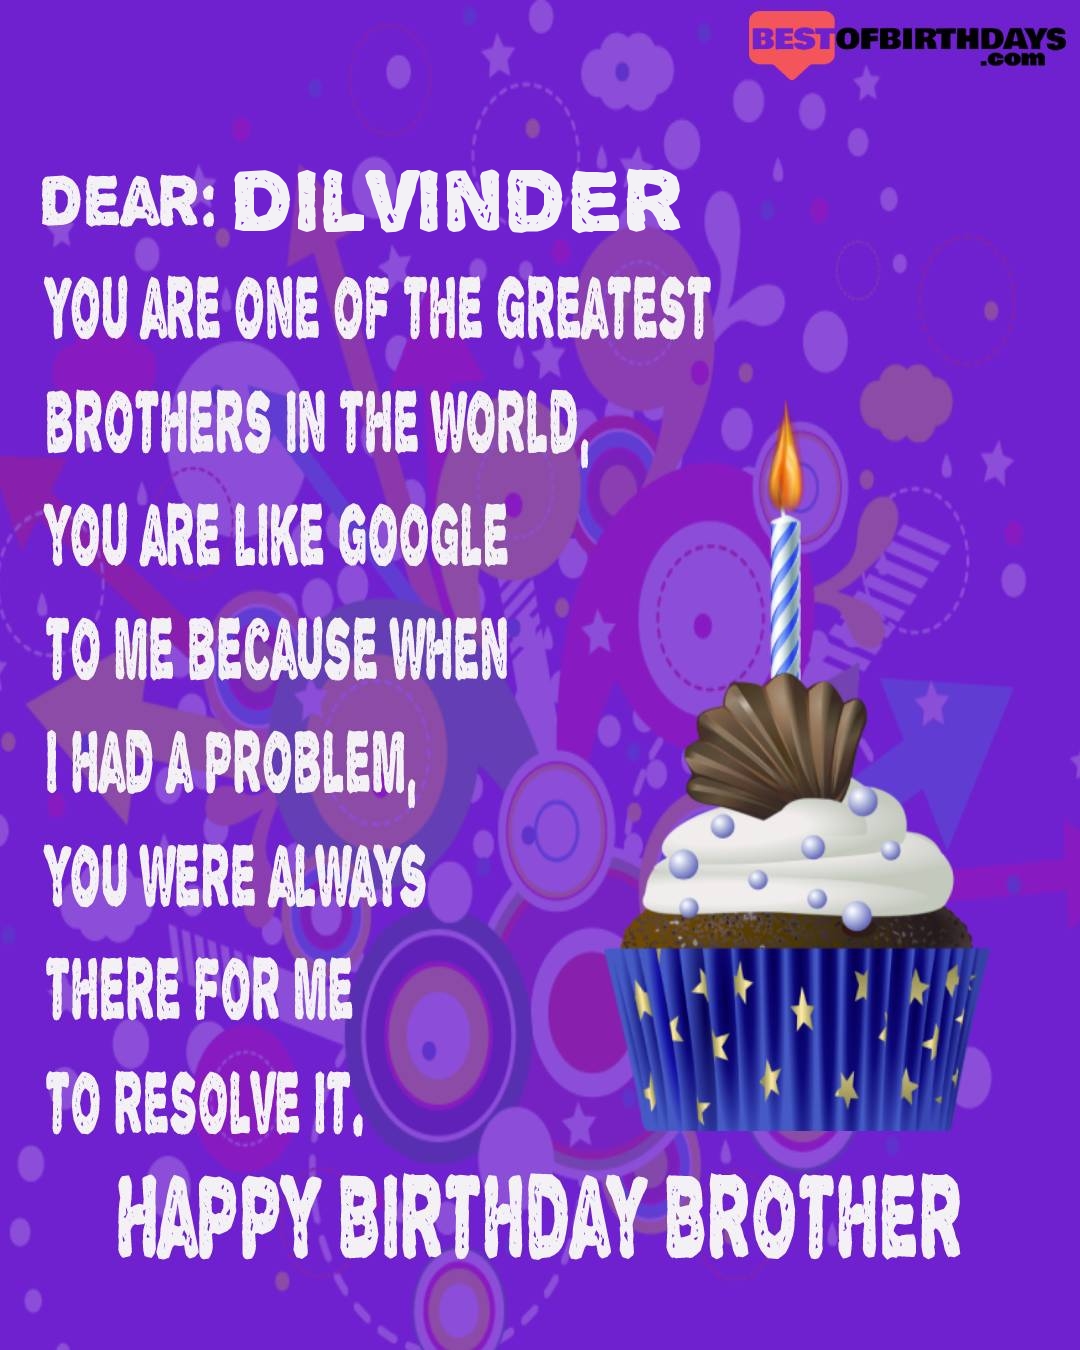 Happy birthday dilvinder bhai brother bro